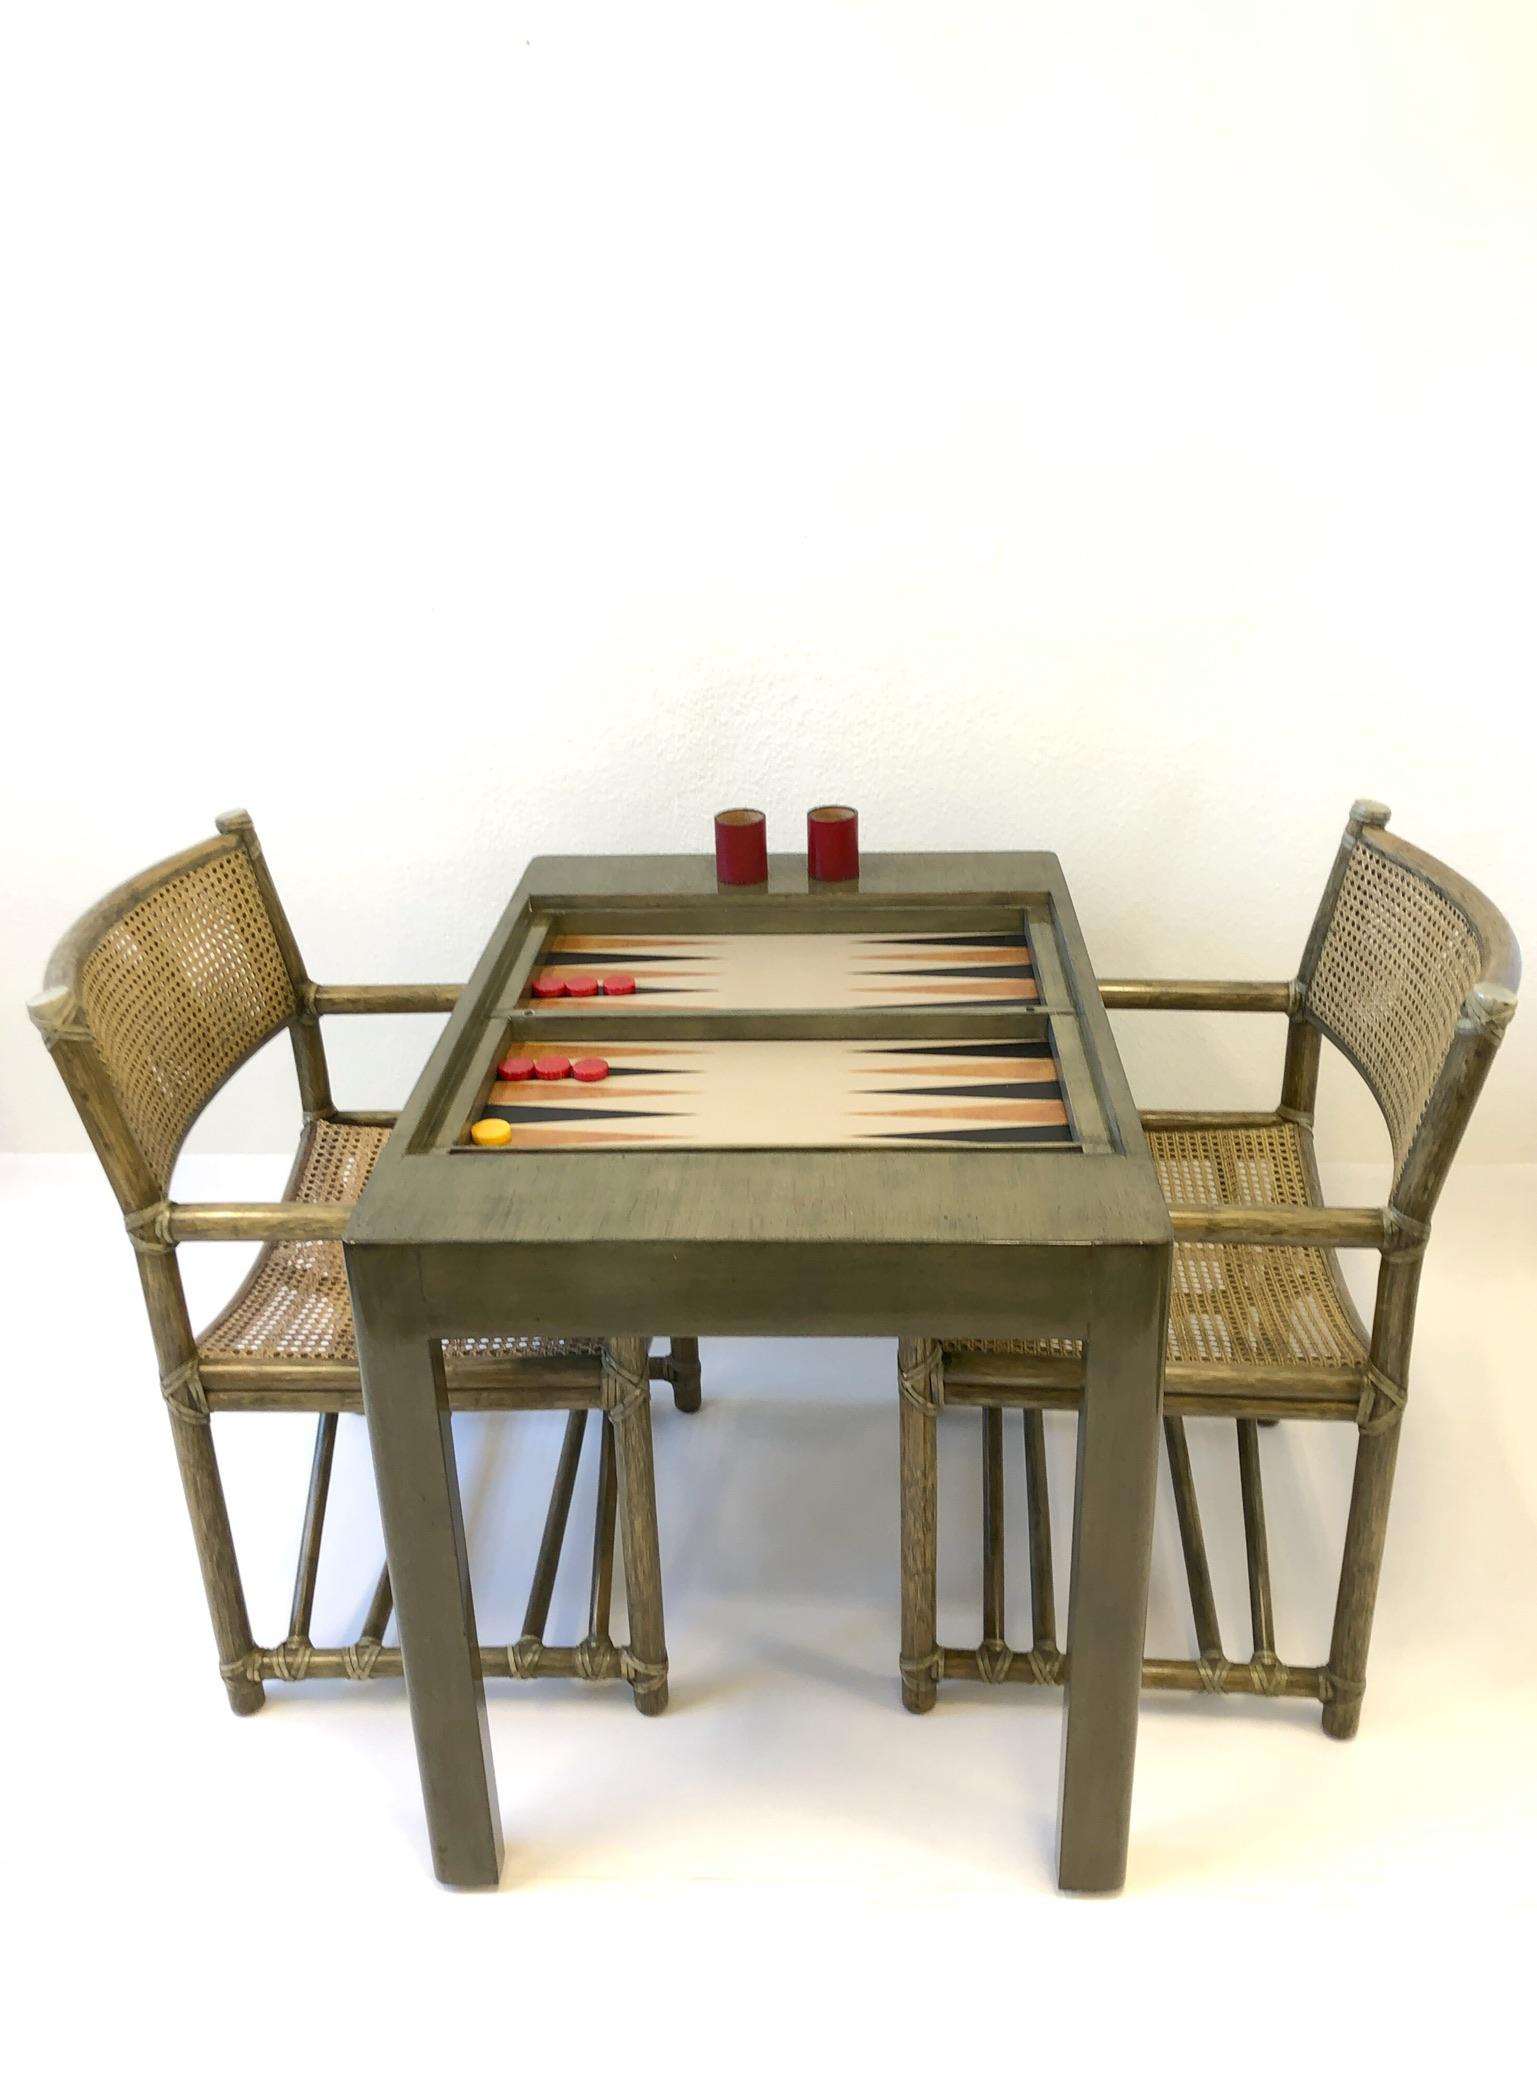 Modern Bob Hopes Backgammon Game Table Set by Steve Chase